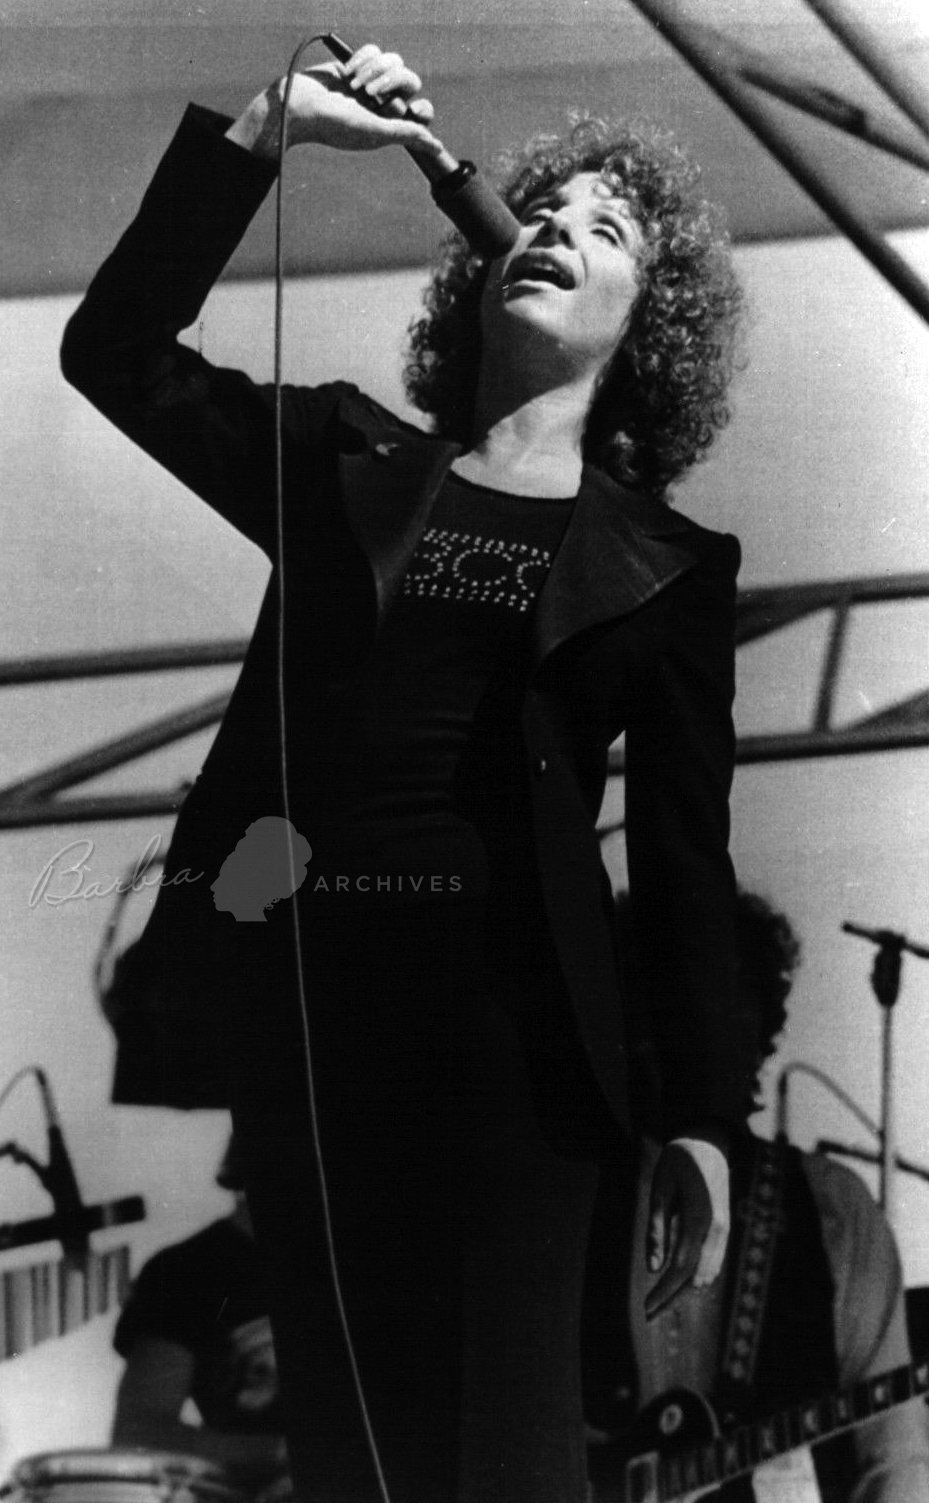 Streisand in black jacket on Arizona stage.